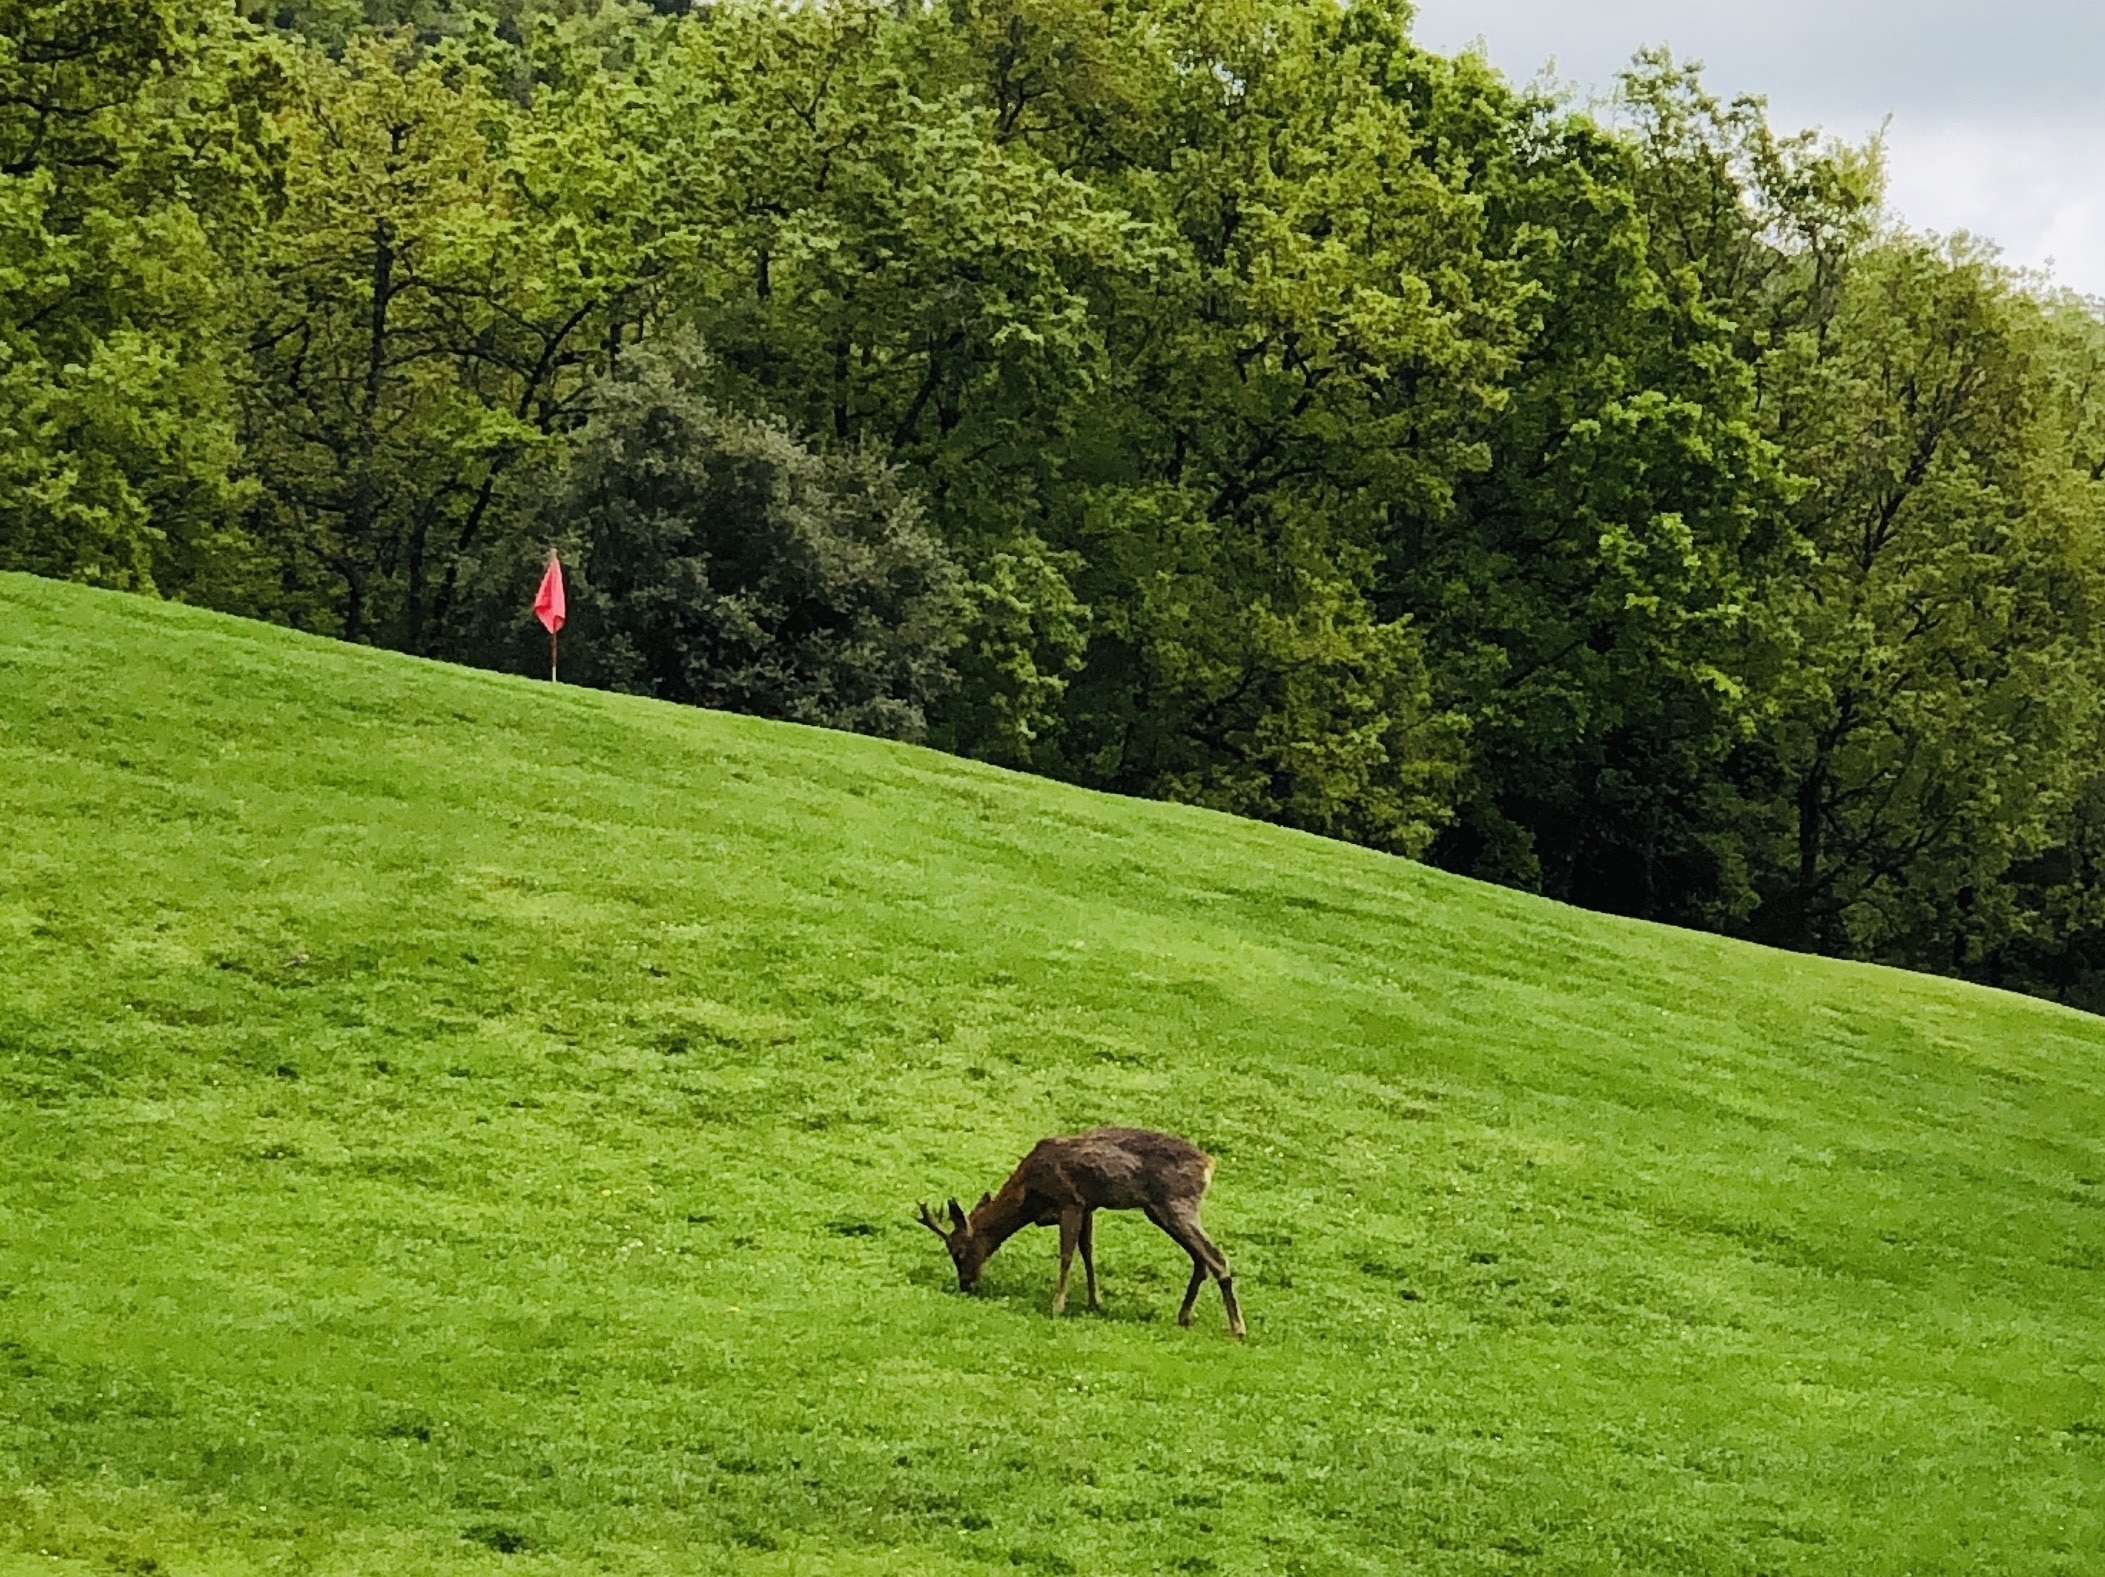 Golfing with wildlife